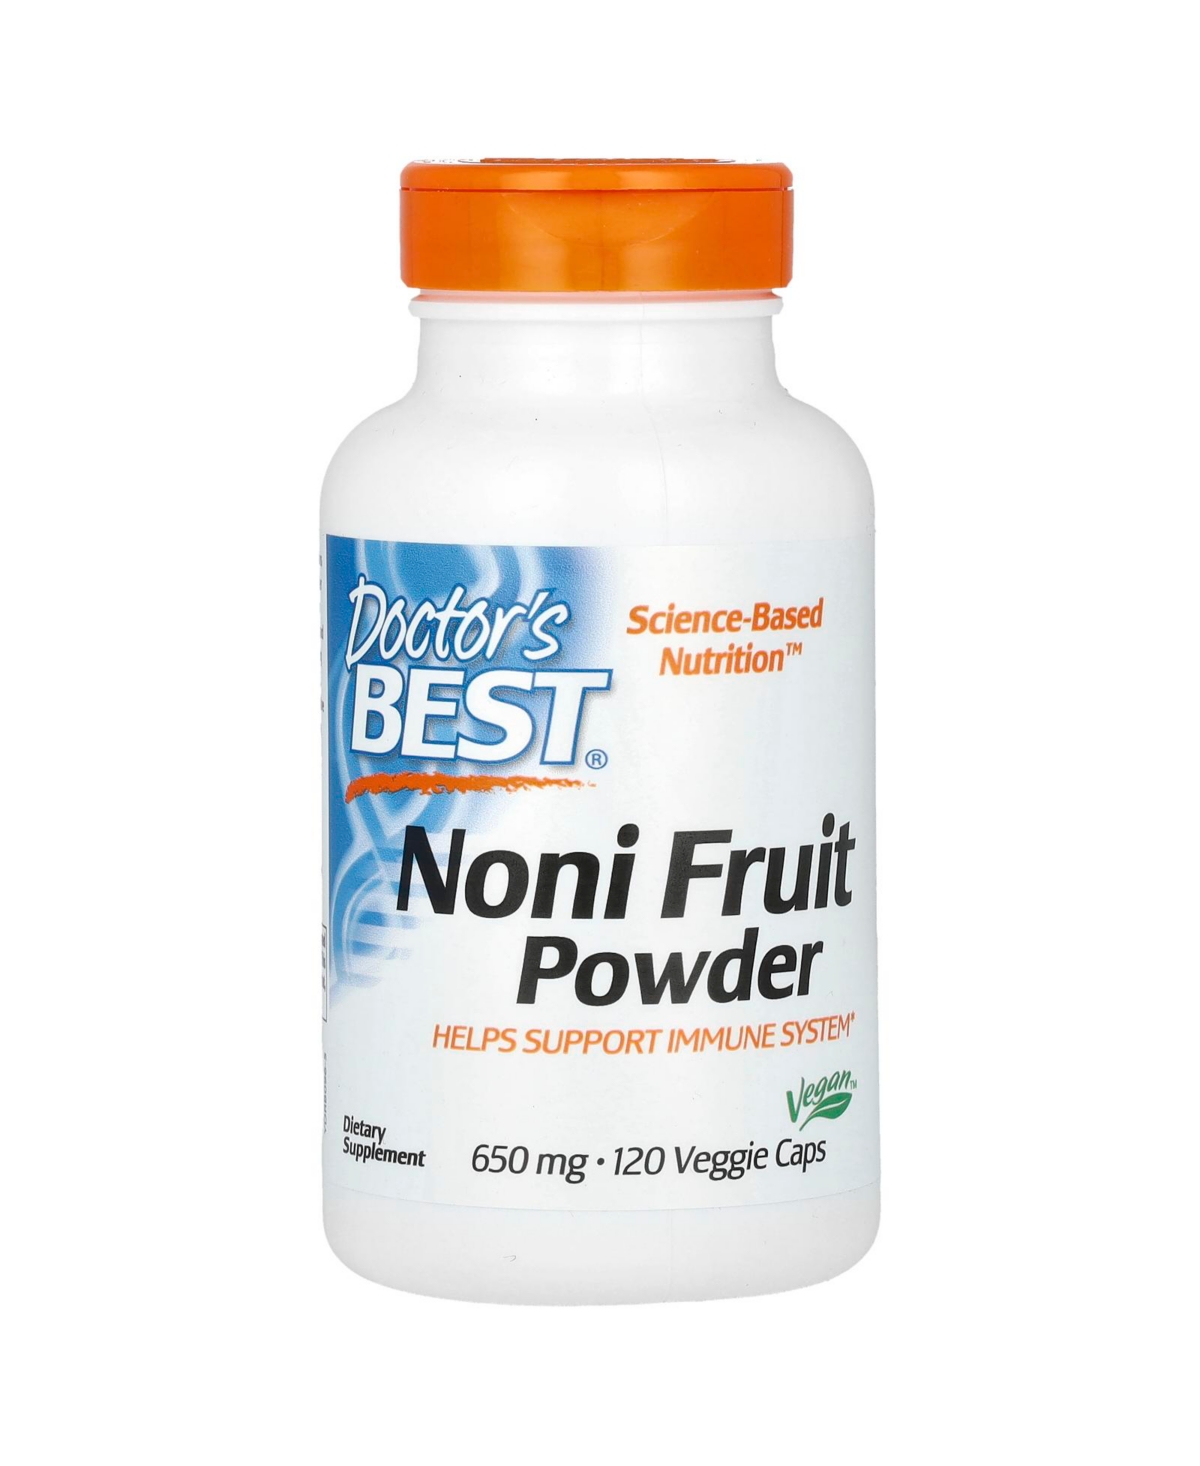 Noni Fruit Powder 1 300 mg - 120 Veggie Caps (650 mg per Capsule) - Assorted Pre-Pack